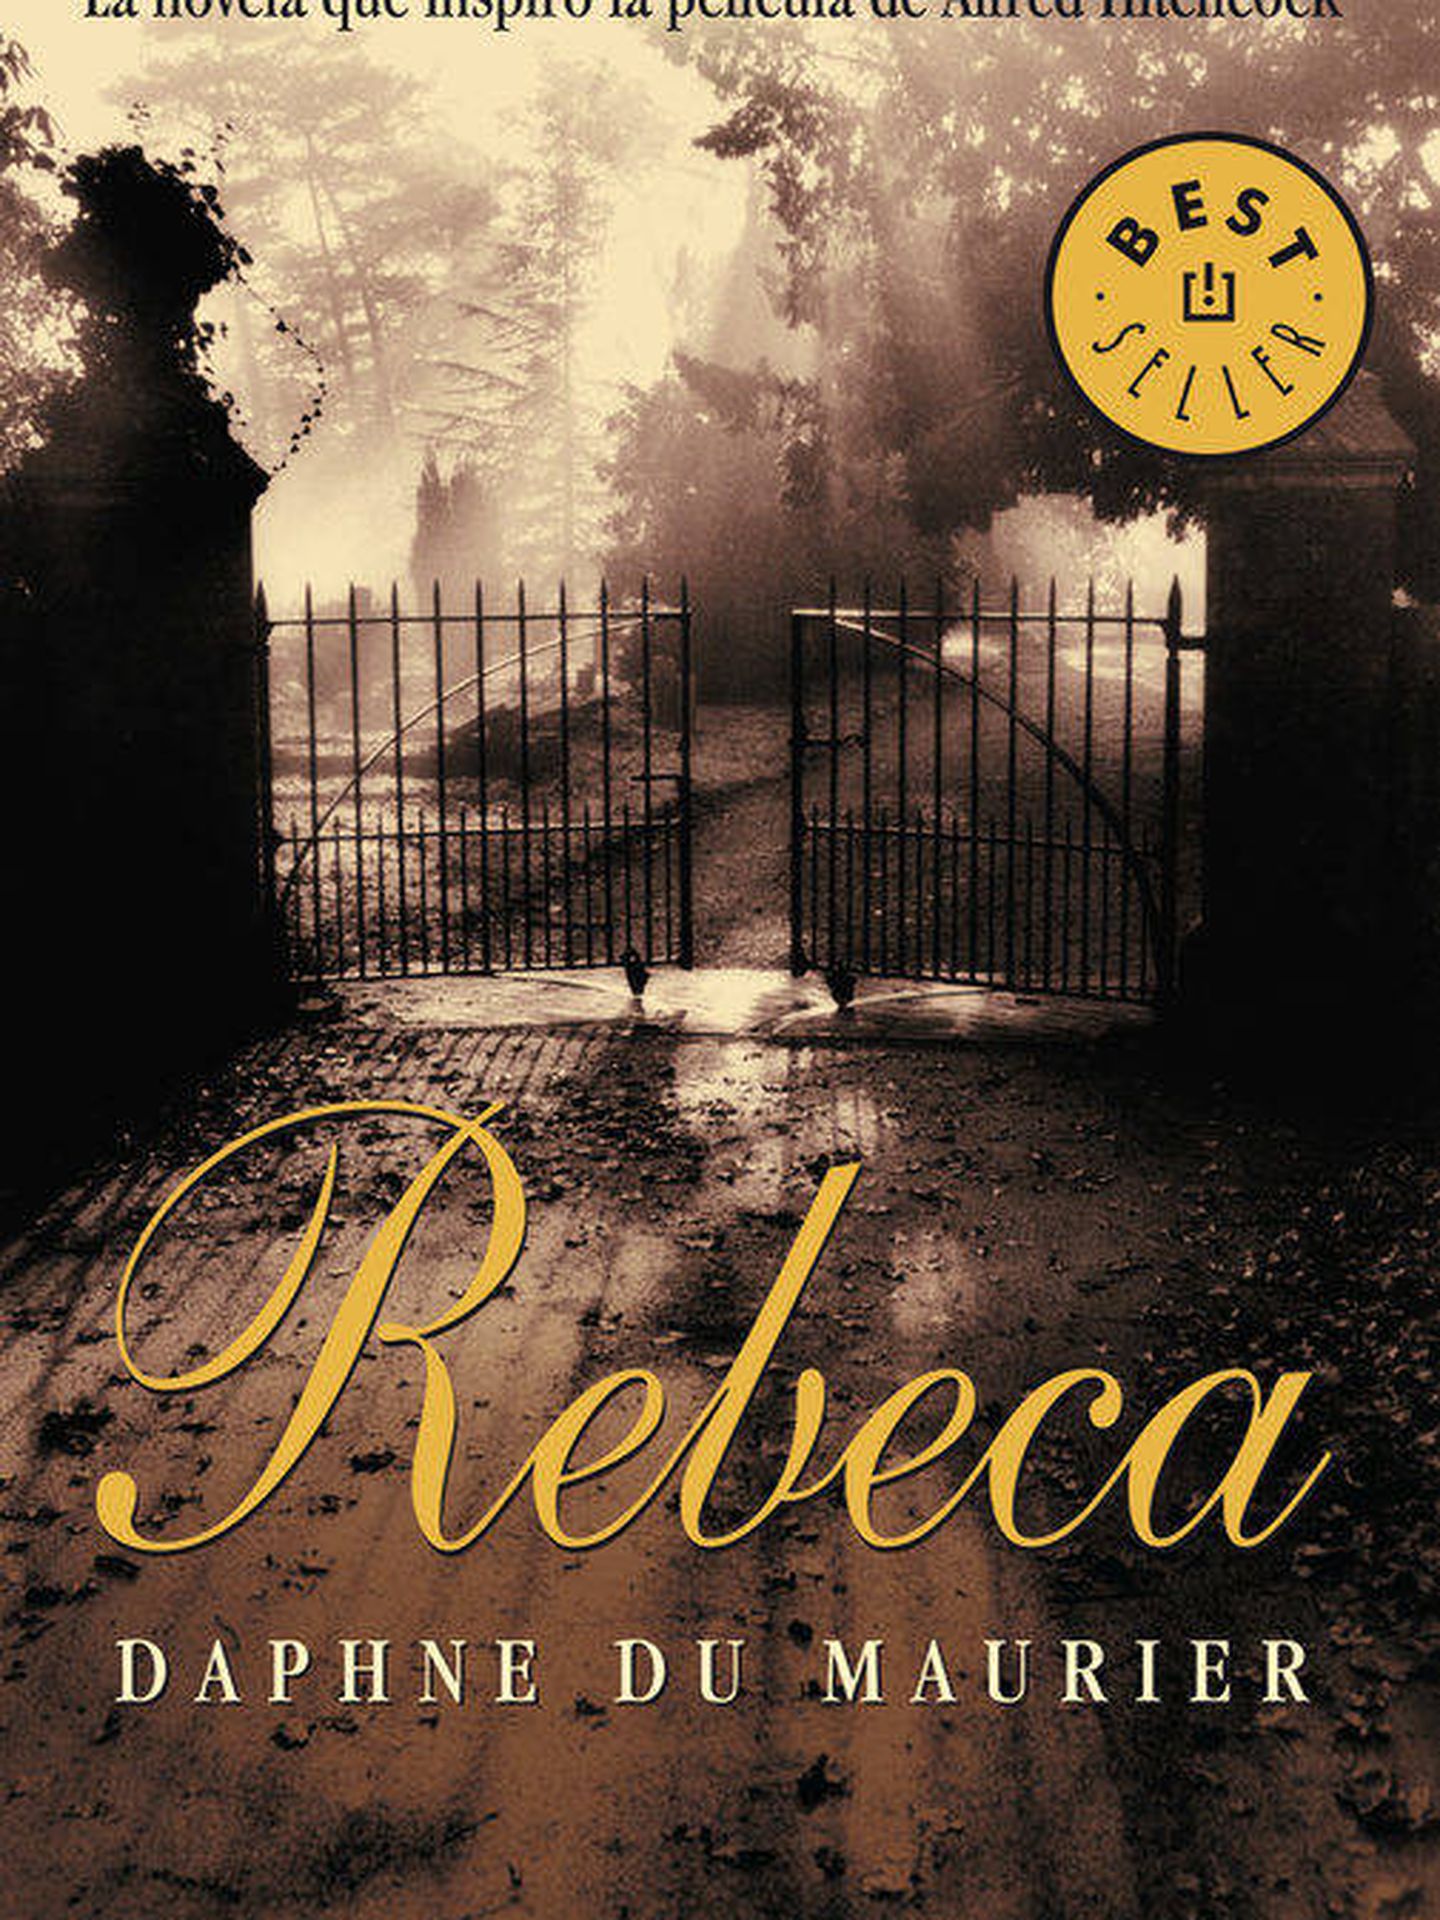 Rebeca, de Daphne du Maurier.